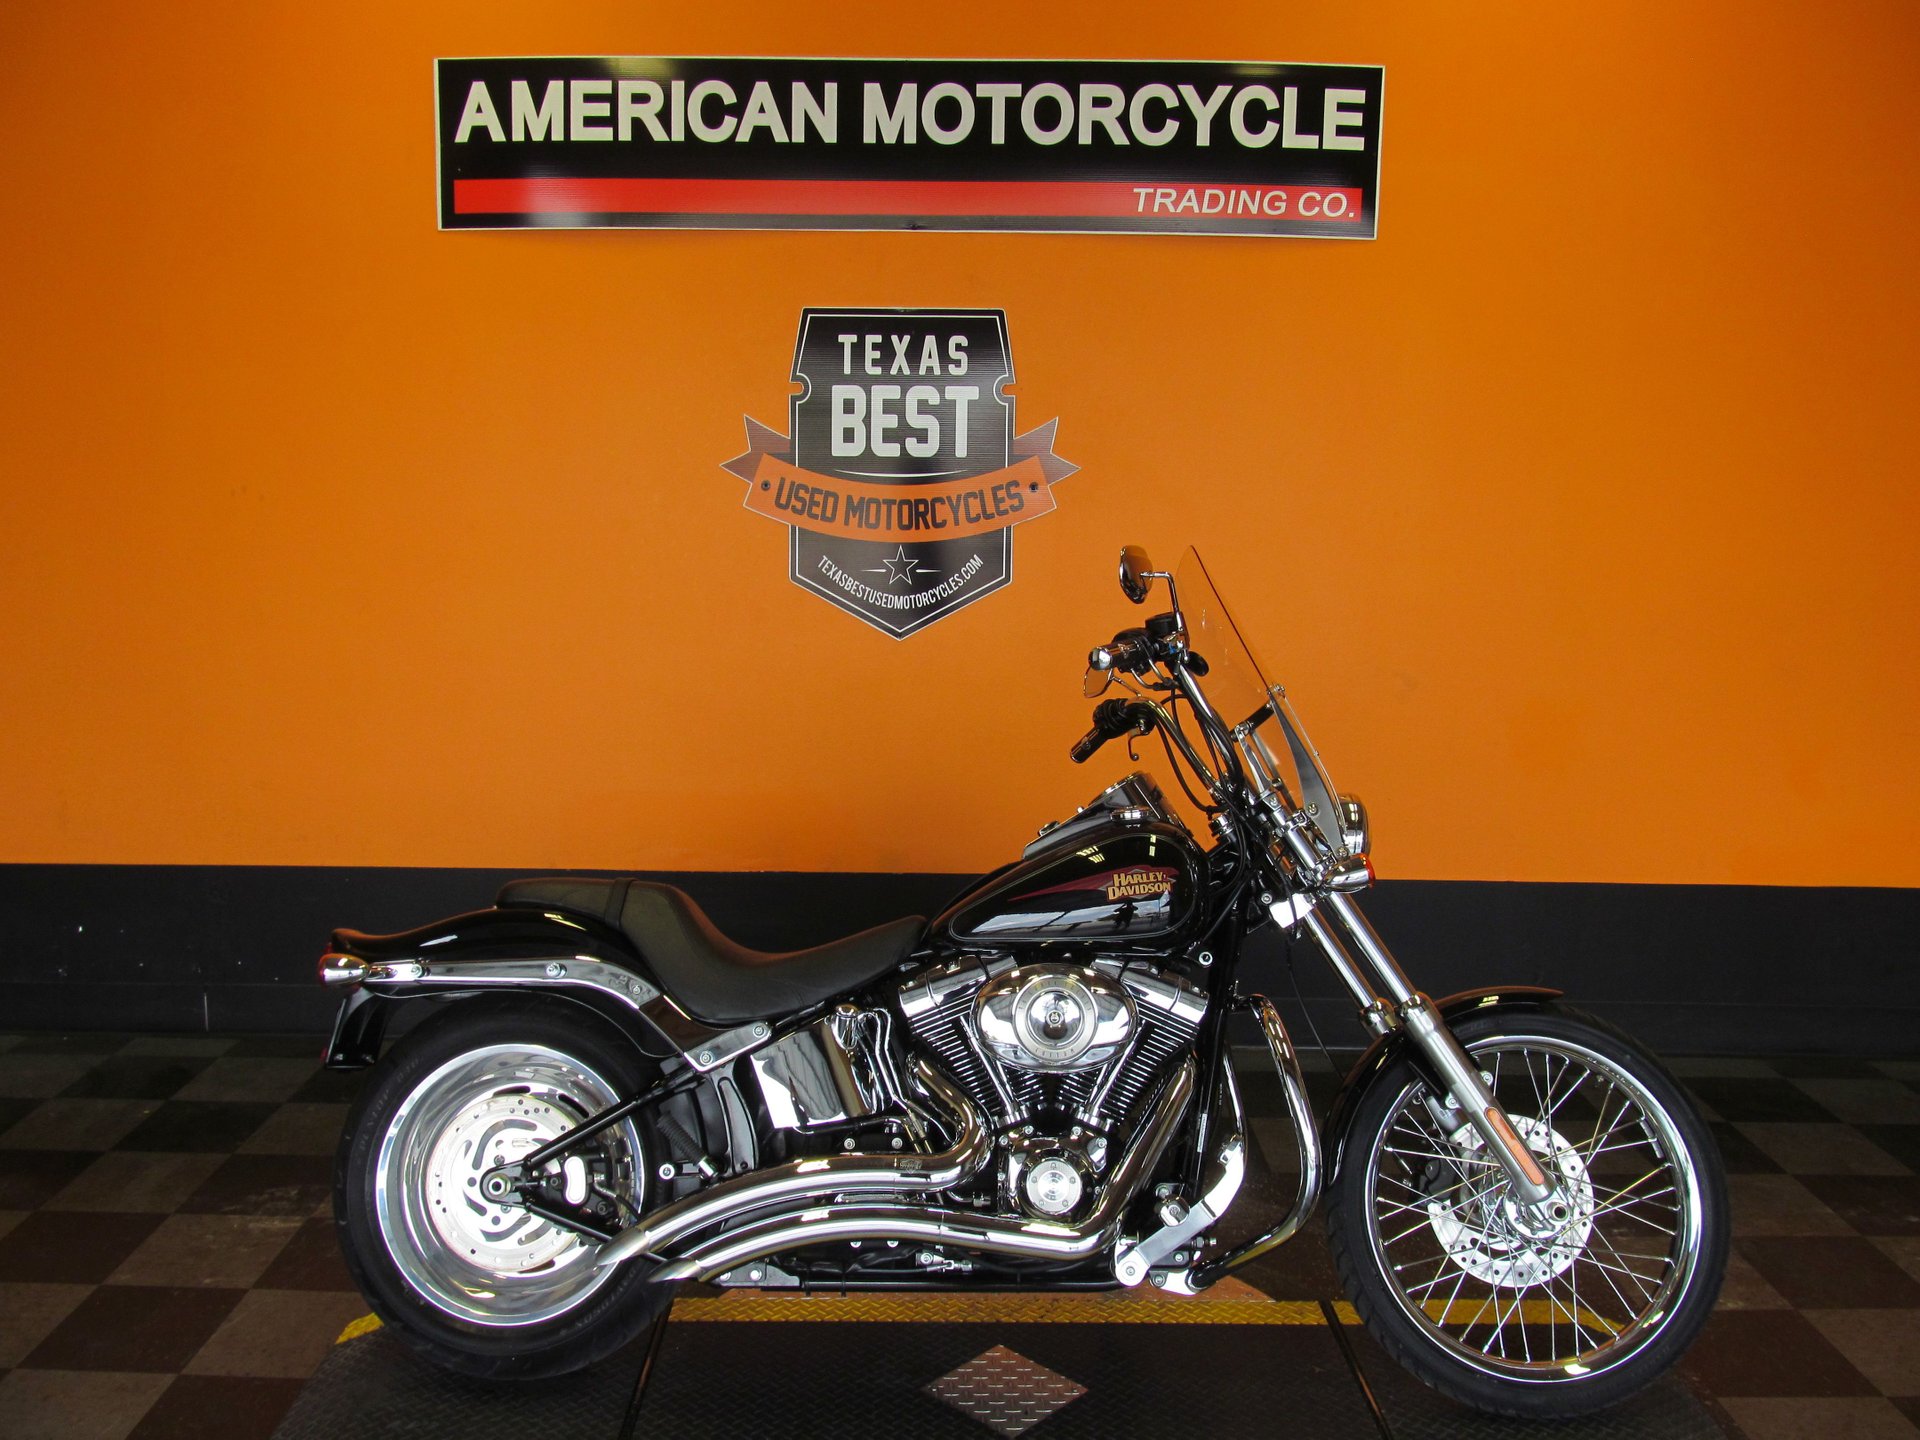 2010 Harley-Davidson Softail Custom | American Motorcycle Trading Company -  Used Harley Davidson Motorcycles